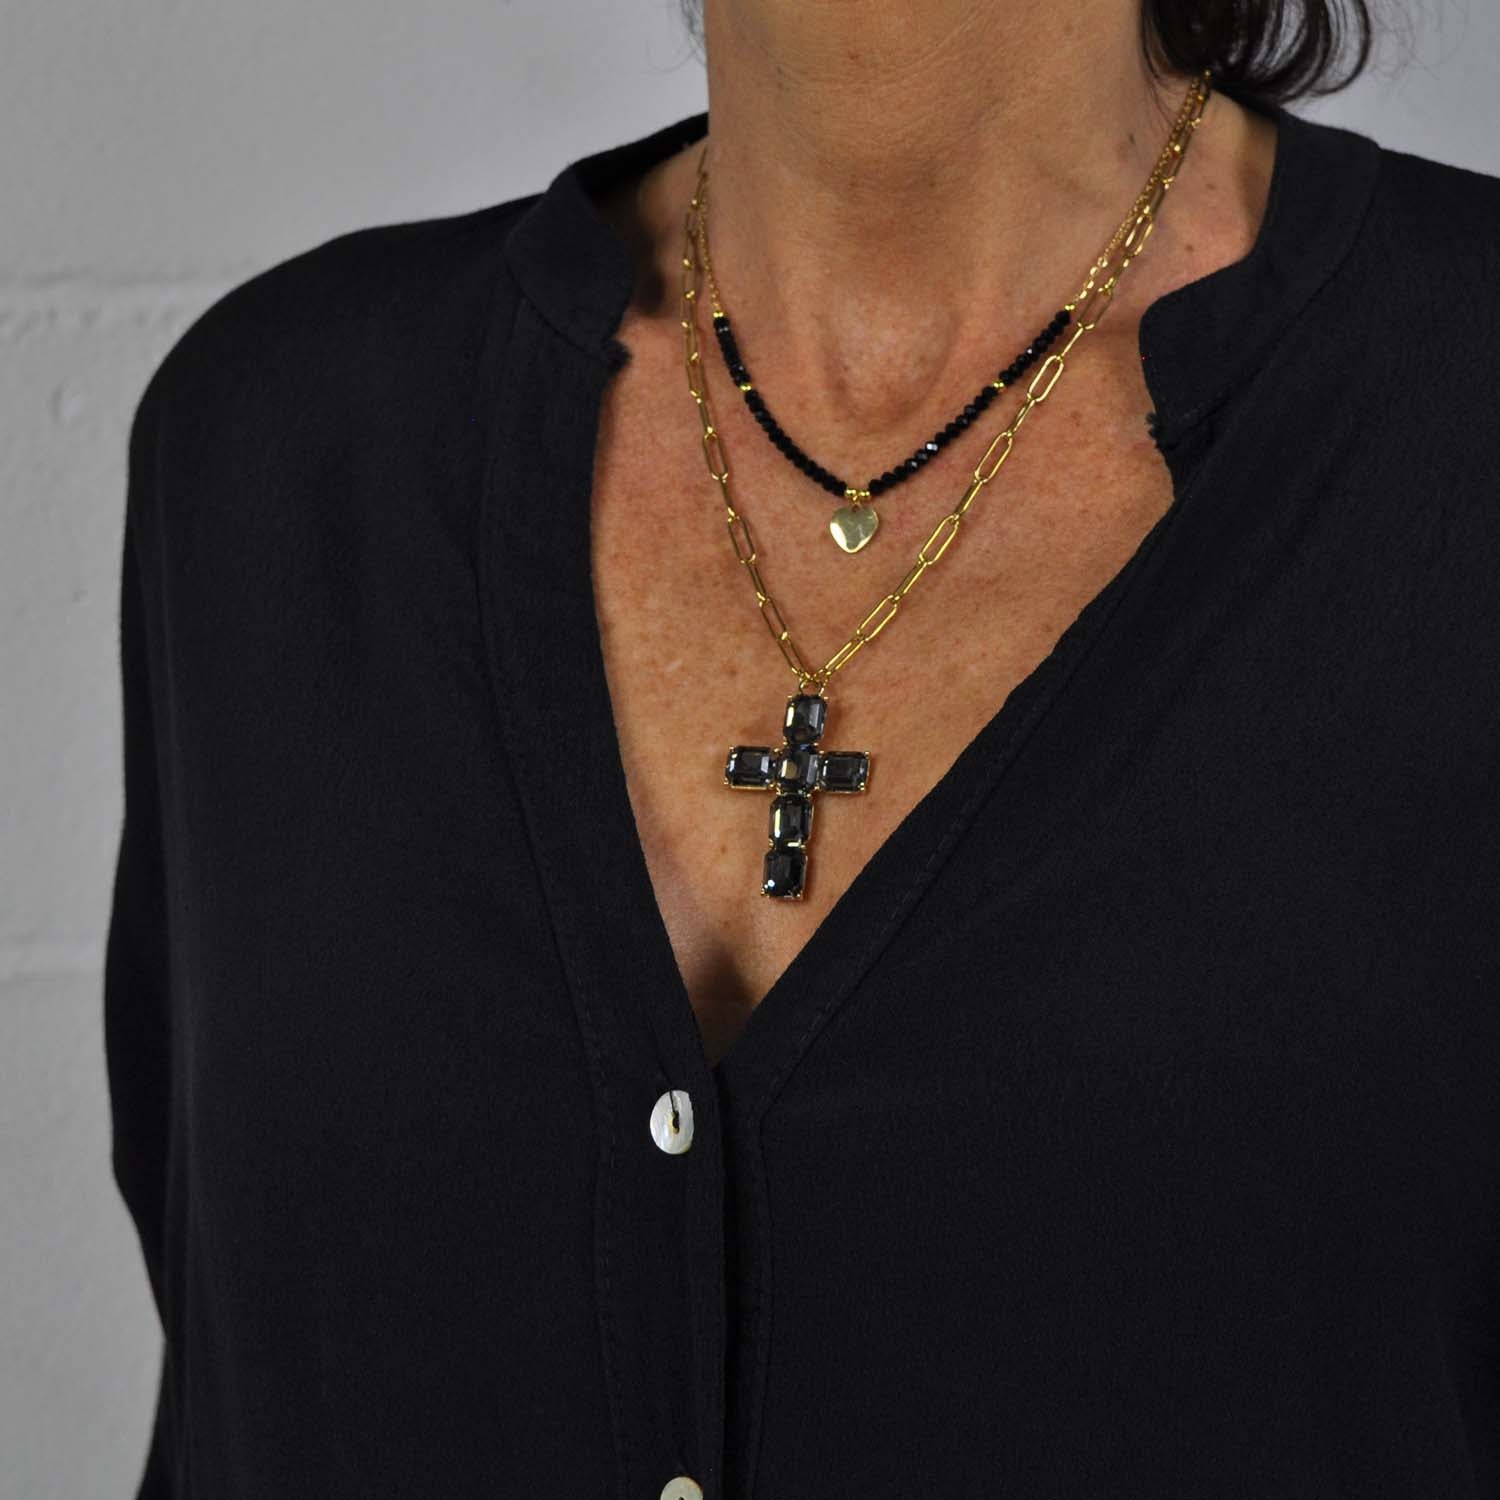 Grey cross necklace